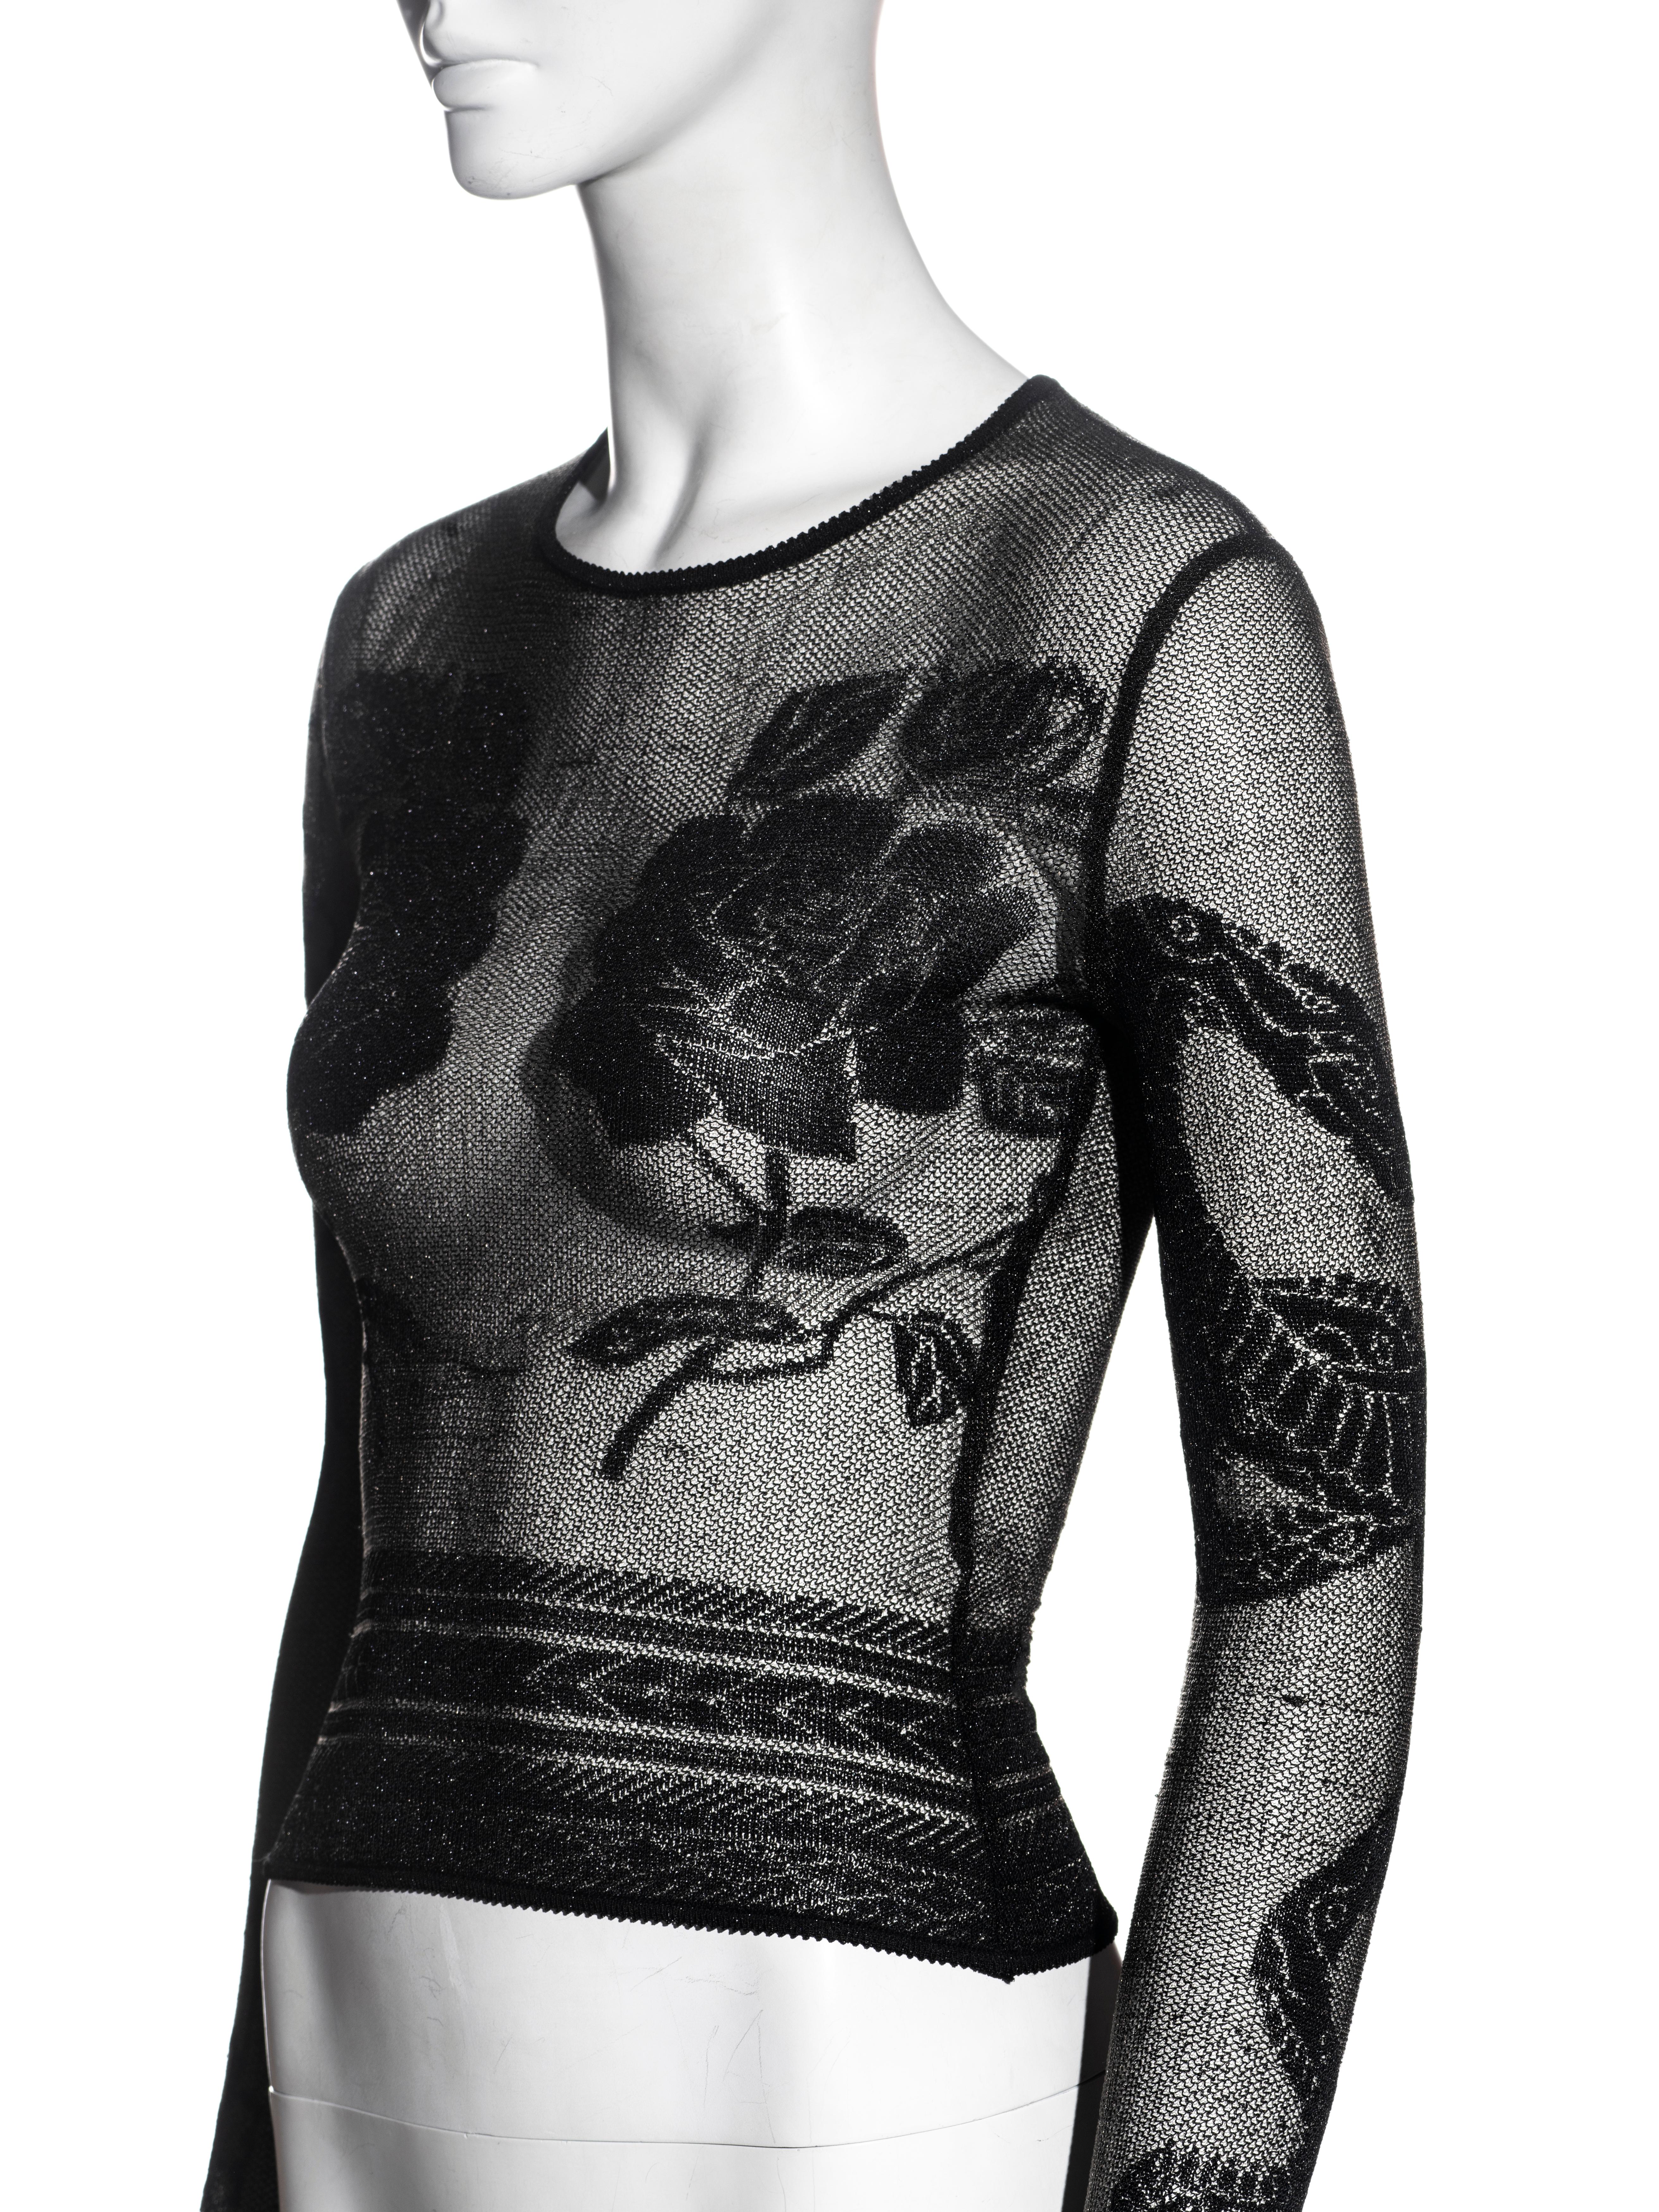 Black John Galliano black sheer knit tattoo top, fw 1997